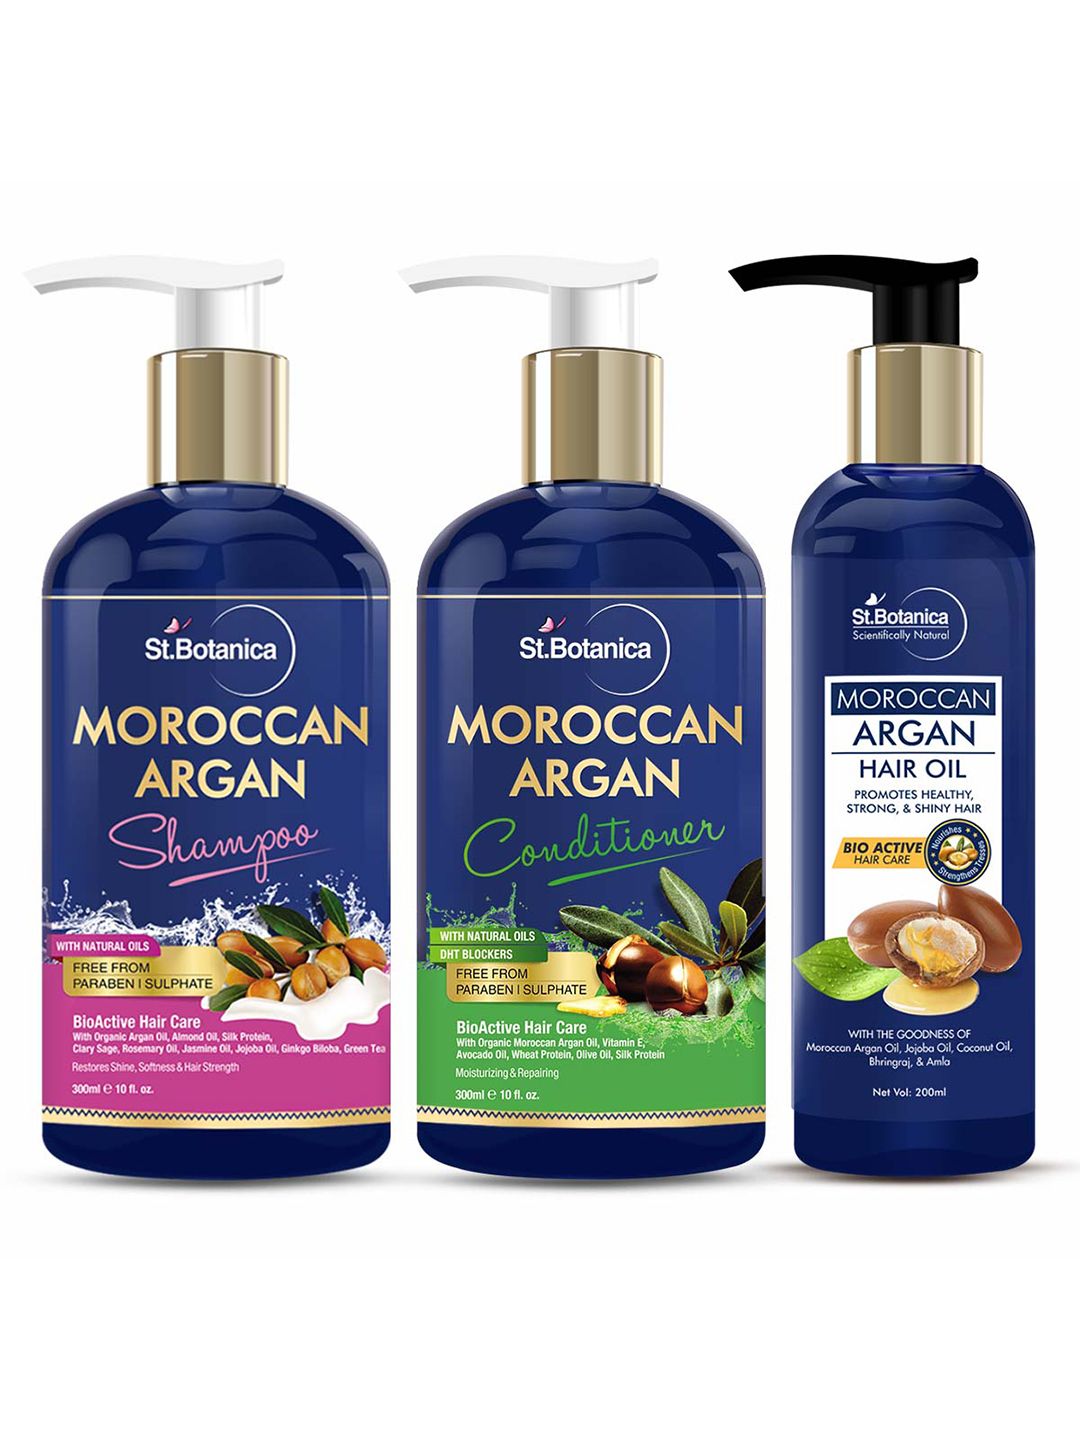 St.Botanica Moroccan Argan Shampoo Conditioner Hair Oil Price in India